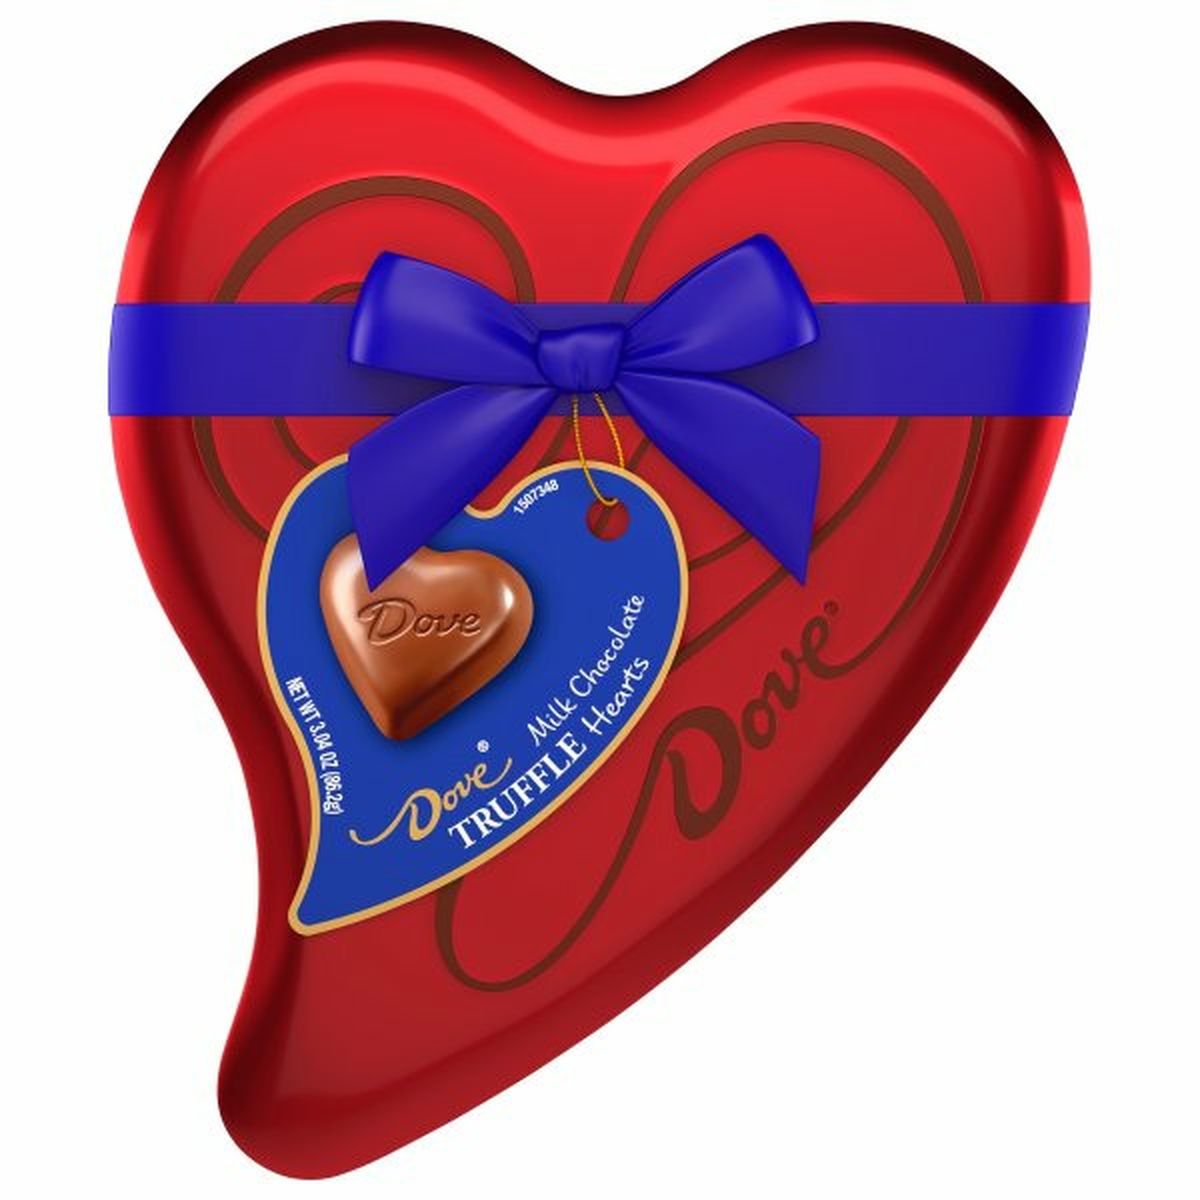 Calories in Dove Milk Chocolate, Truflle Hearts